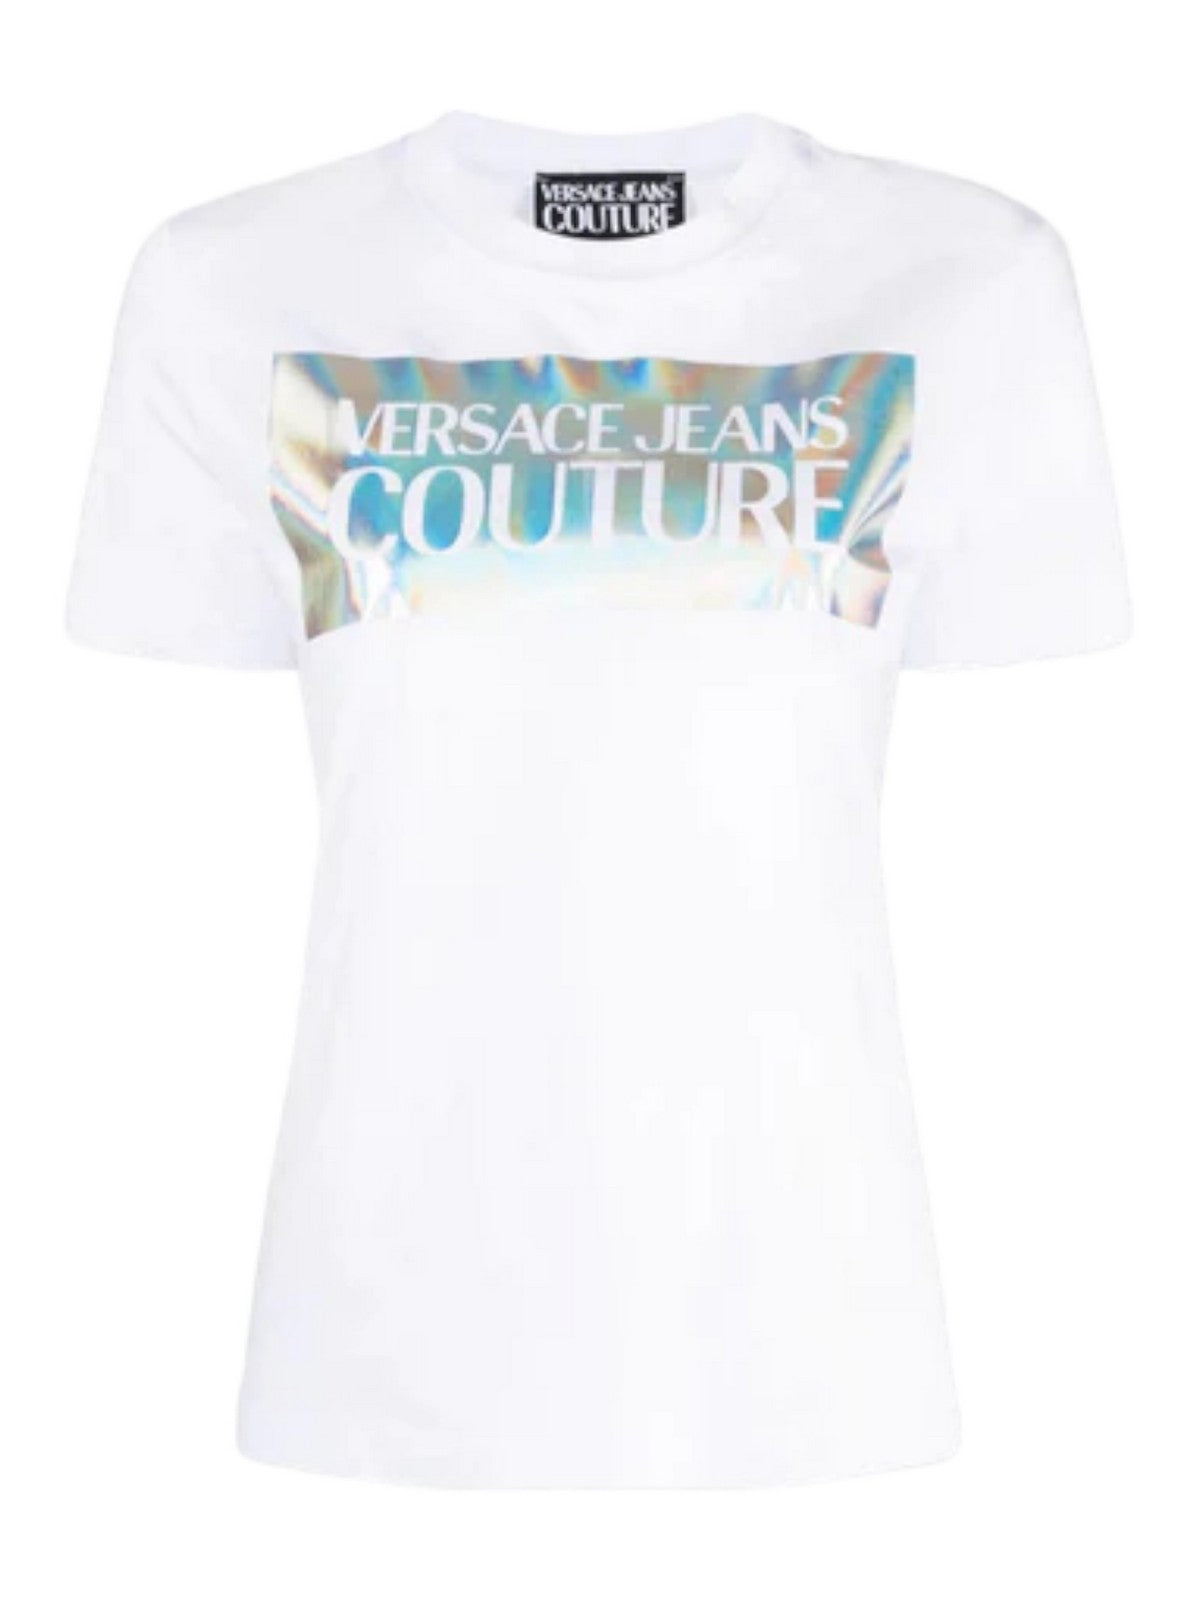 VERSACE JEANS COUTURE T-Shirt e Polo Donna  75HAHF04 CJ03F 003 Bianco